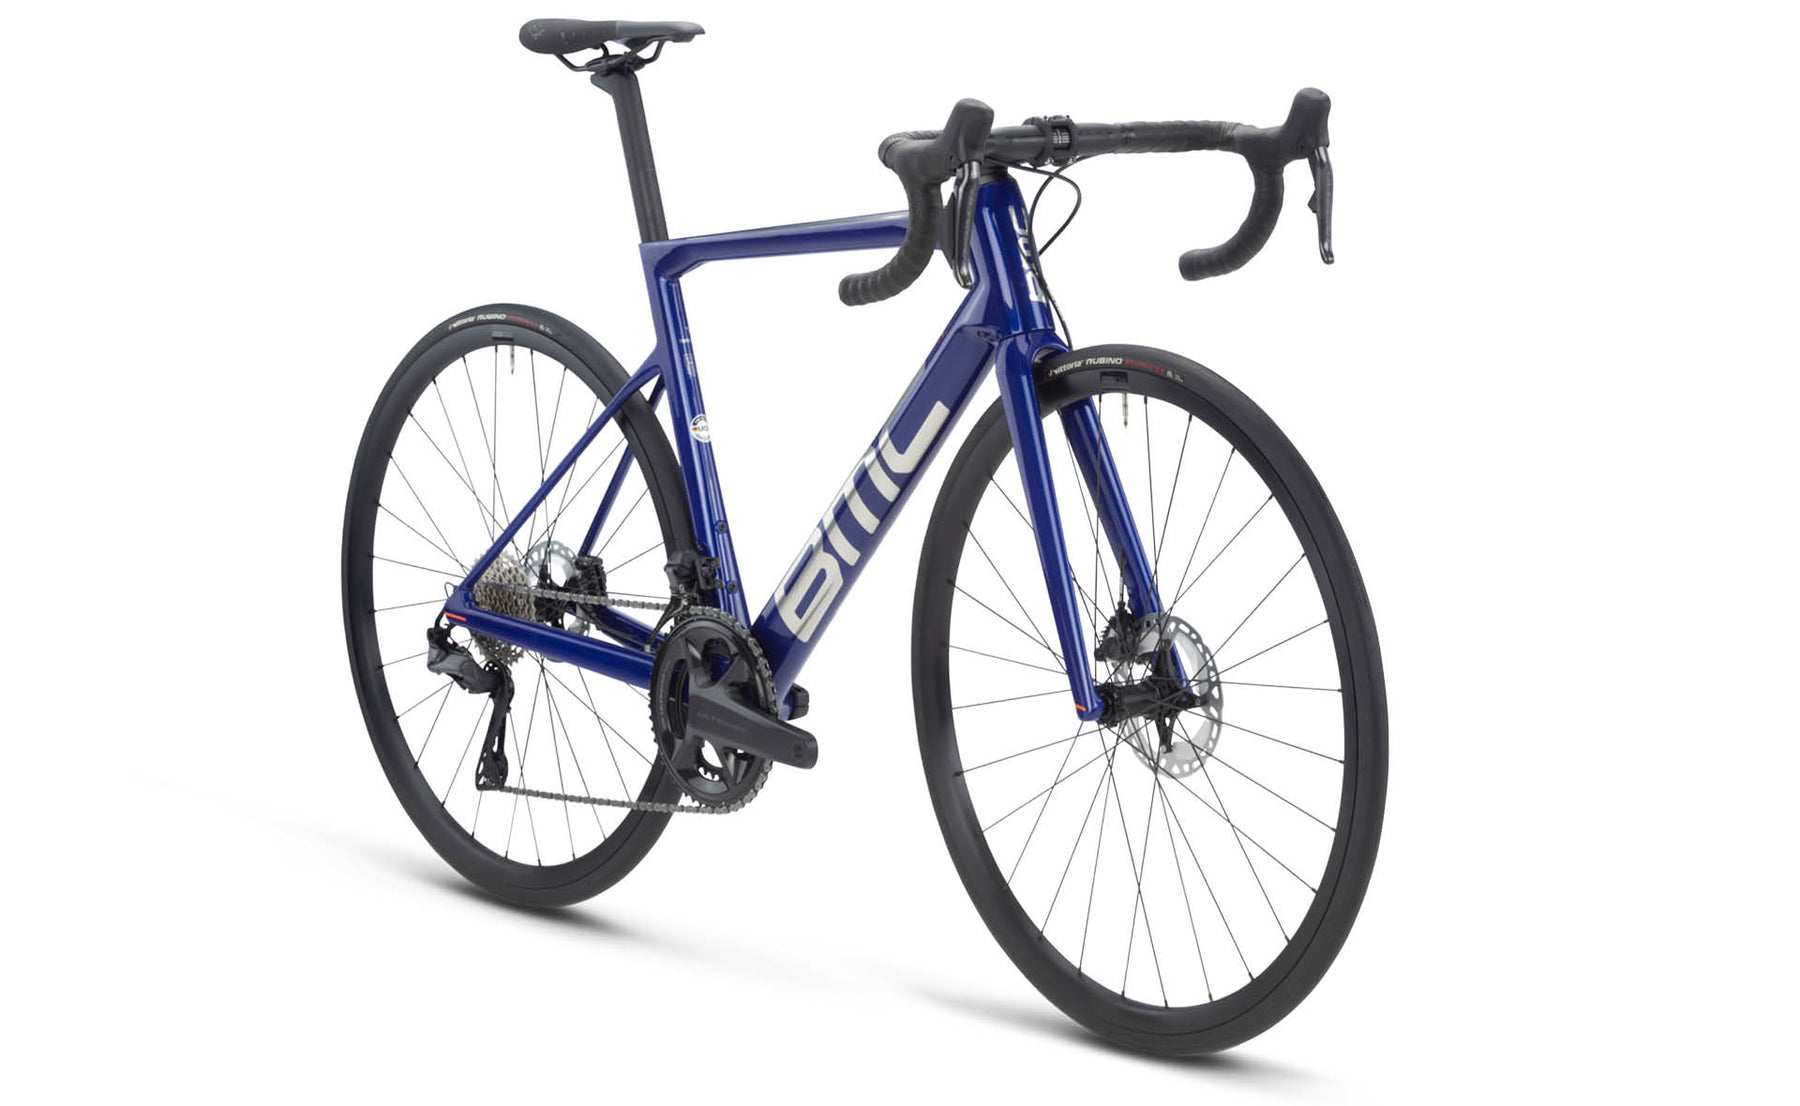 Bicicleta Teammachine SLR THREE, Sparkling blue/Brushed alloy